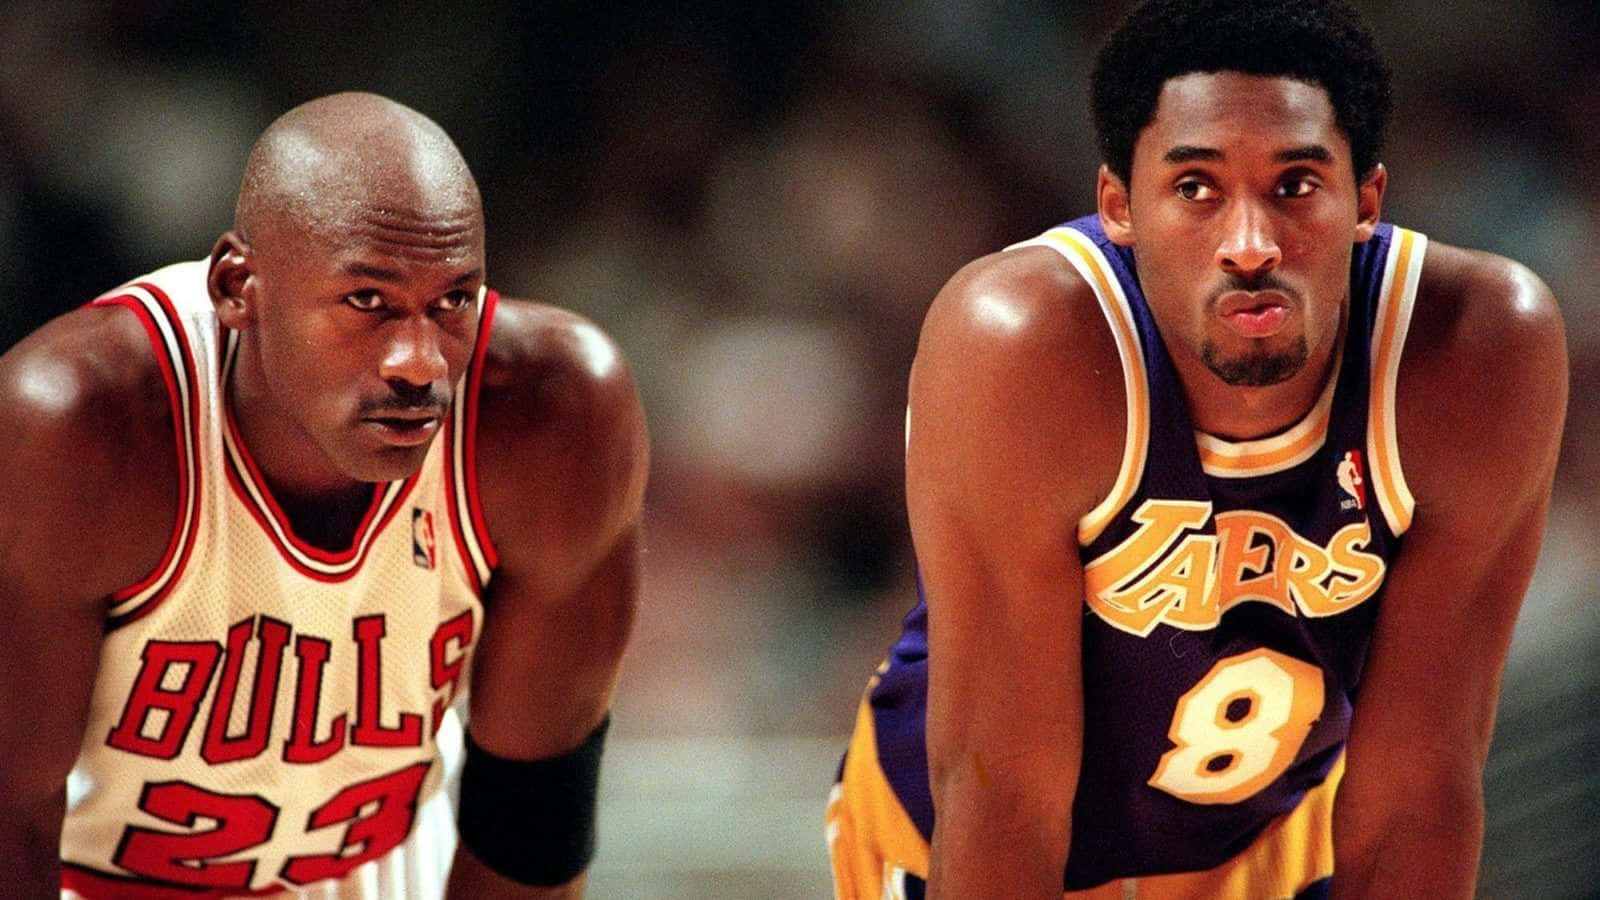 Giovanigiocatori Di Basket Kobe Bryant E Michael Jordan D'epoca. Sfondo